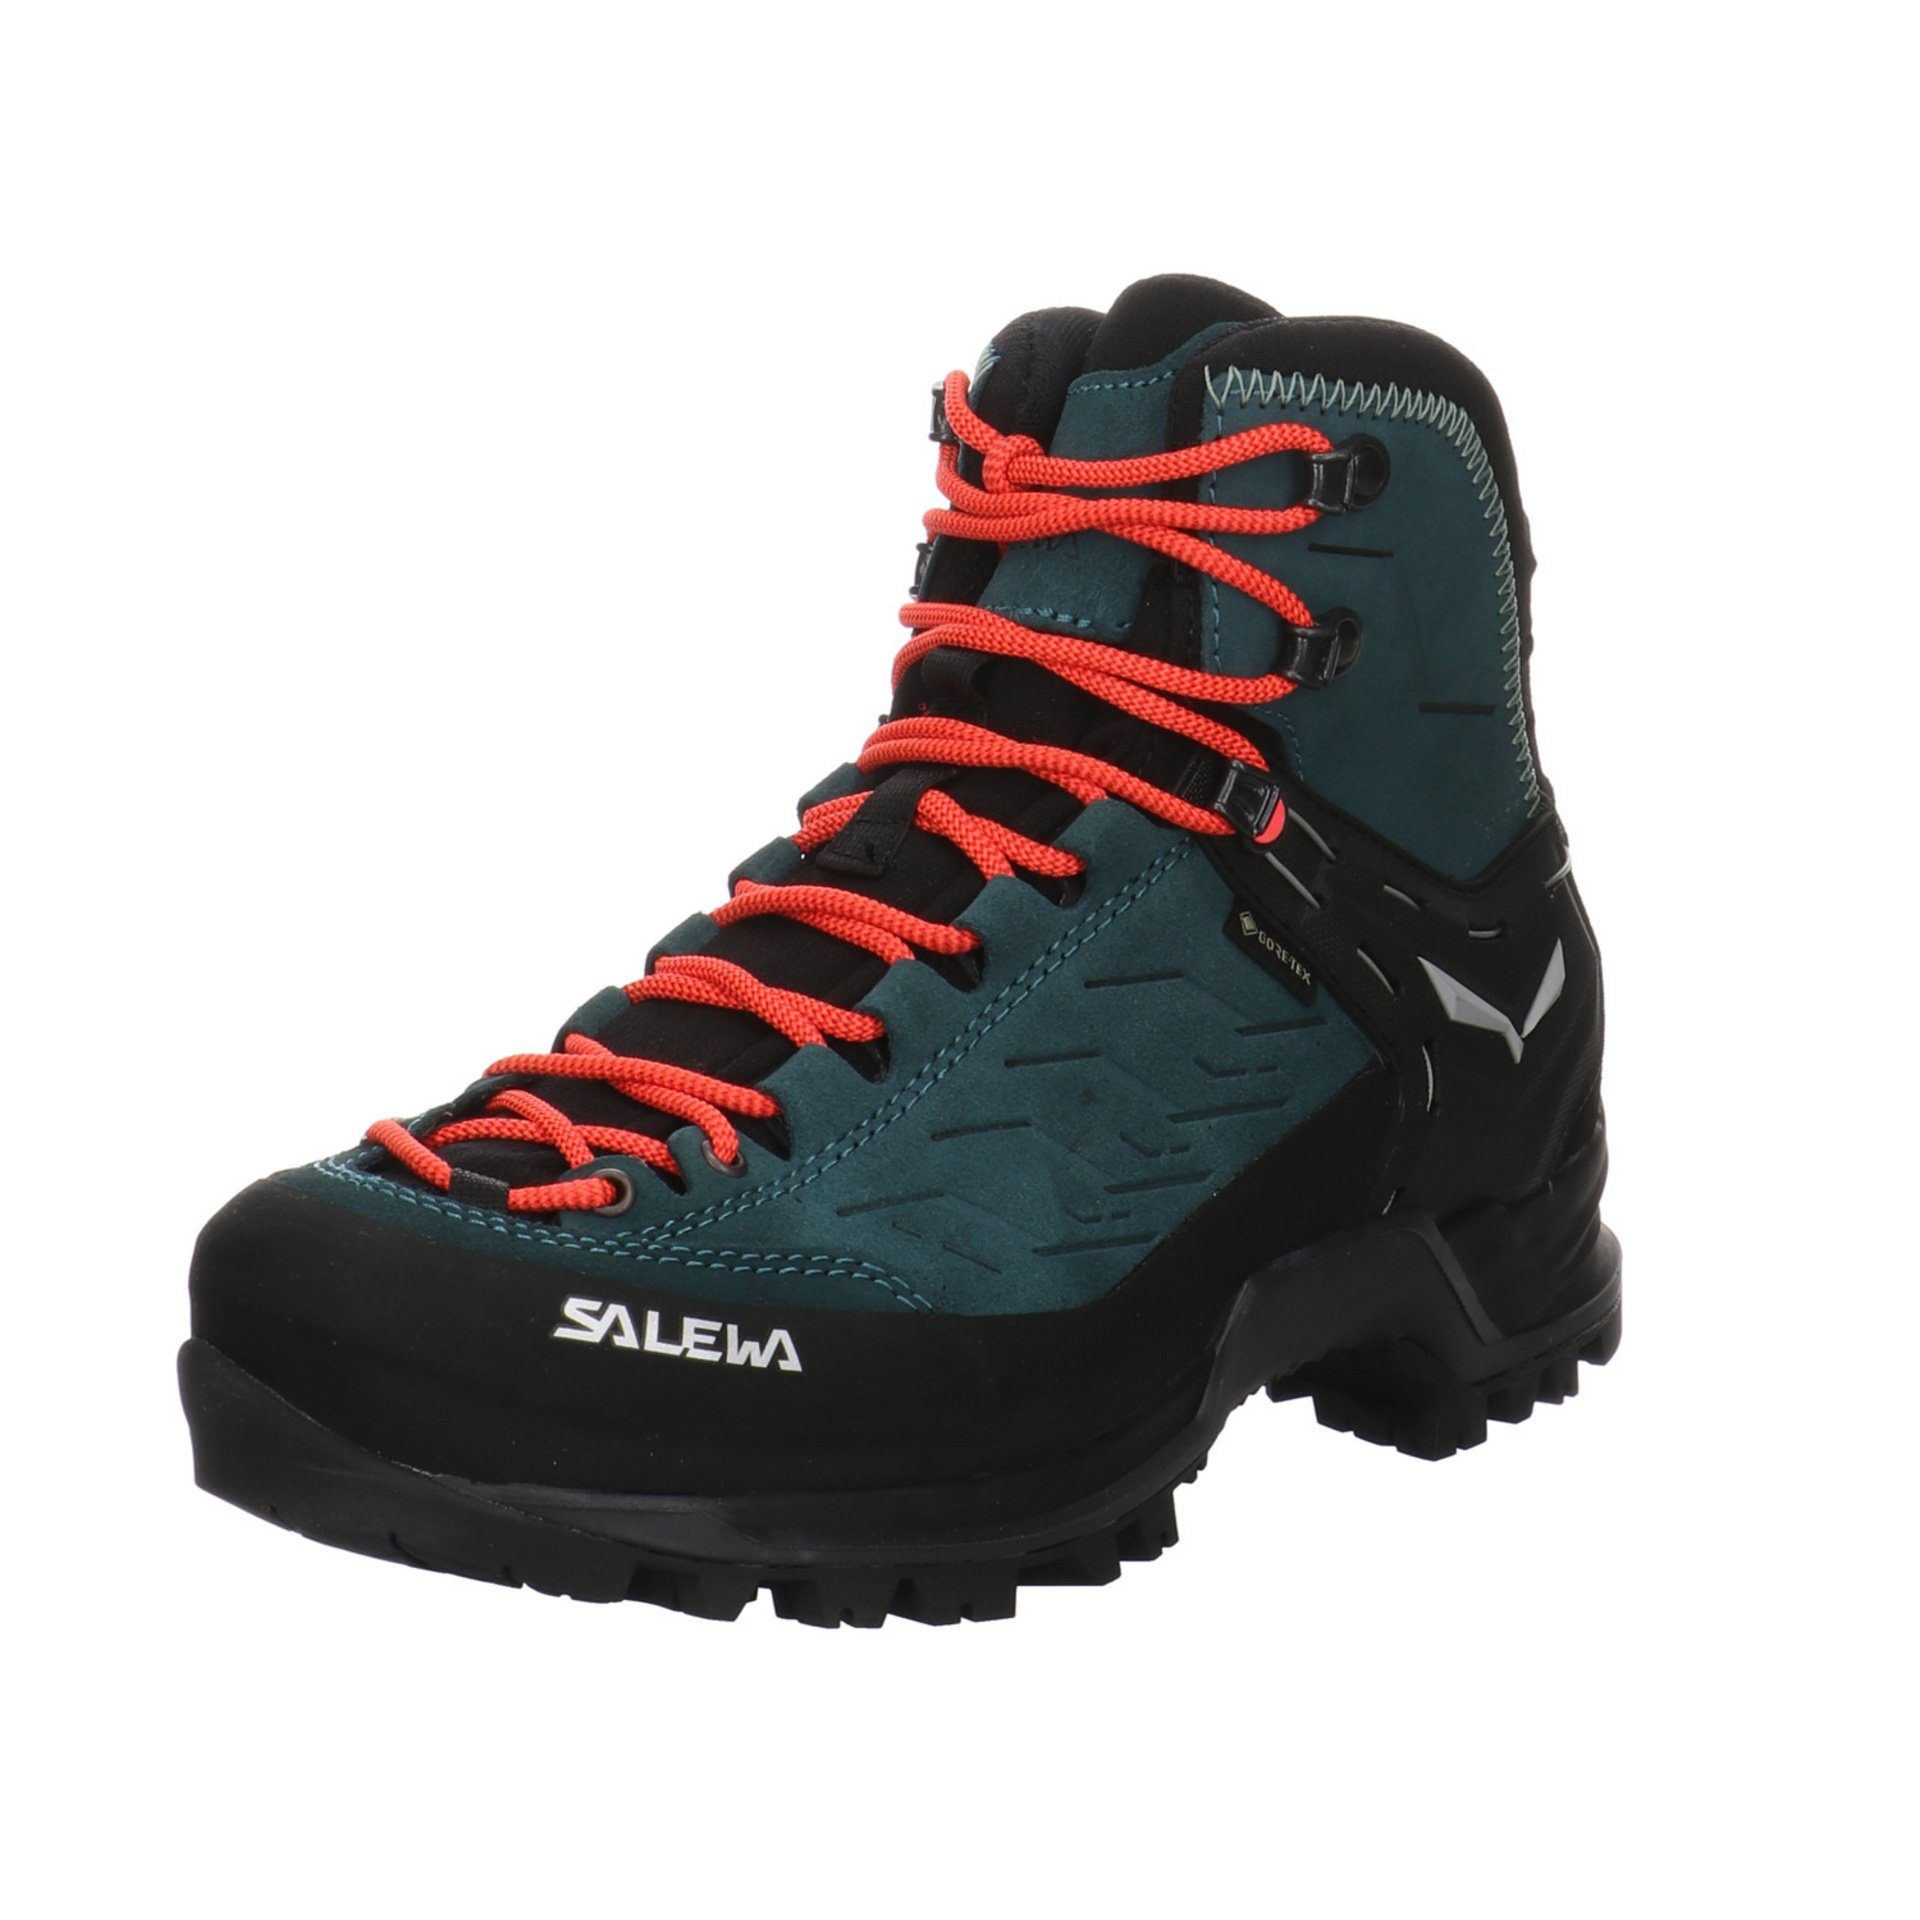 Salewa Damen Schuhe Outdoor Mountain Mid Outdoorschuh Trainer GTX blau Leder-/Textilkombination